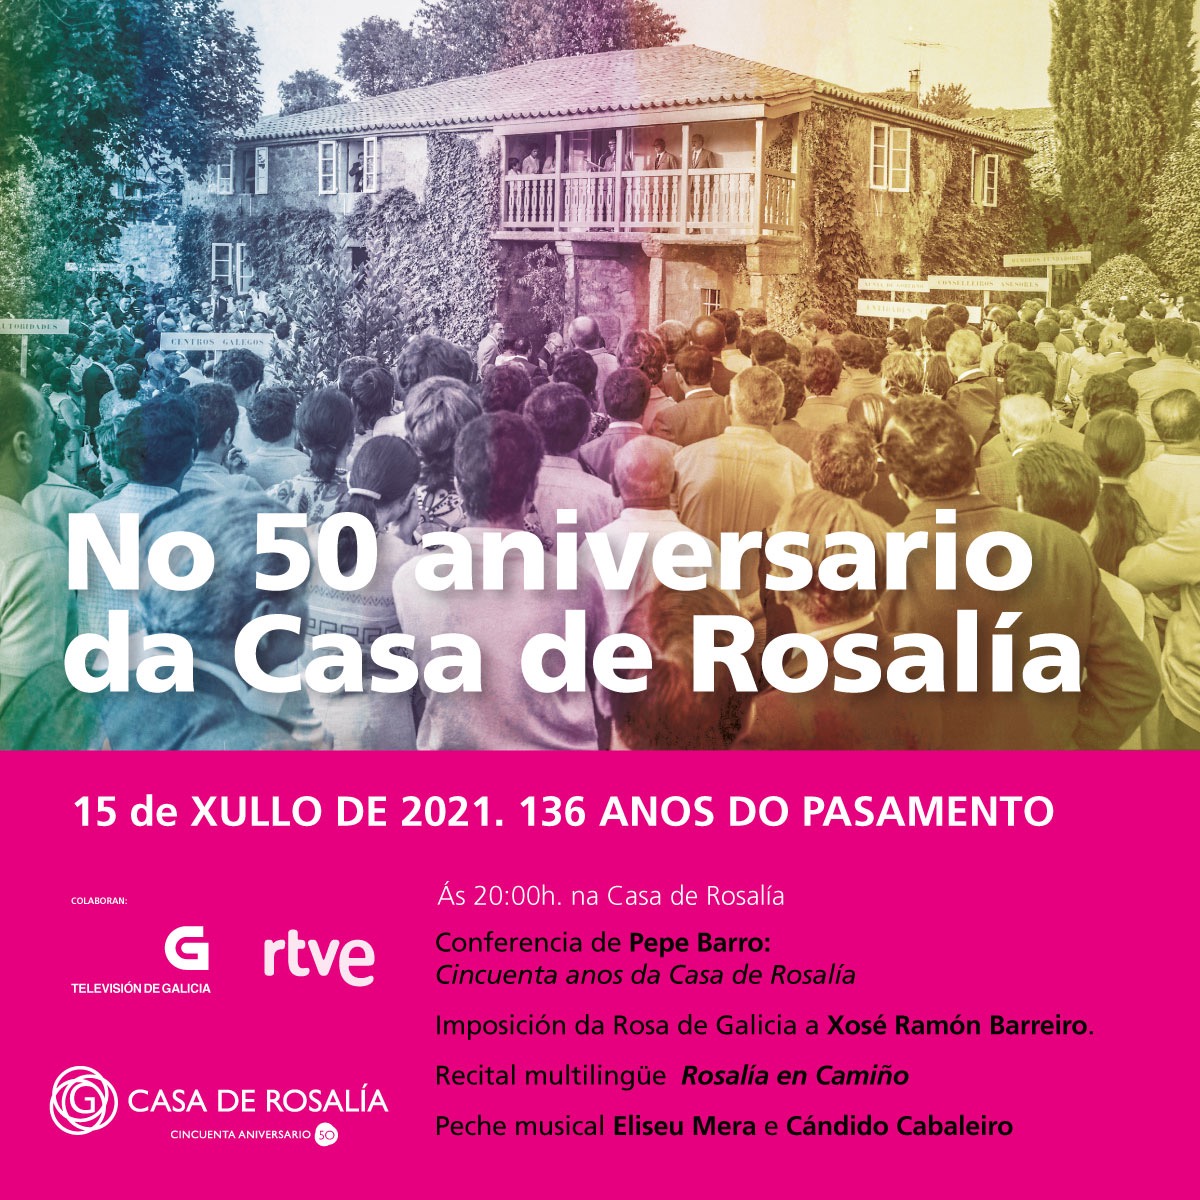 No 50 aniversario da Casa de Rosalía